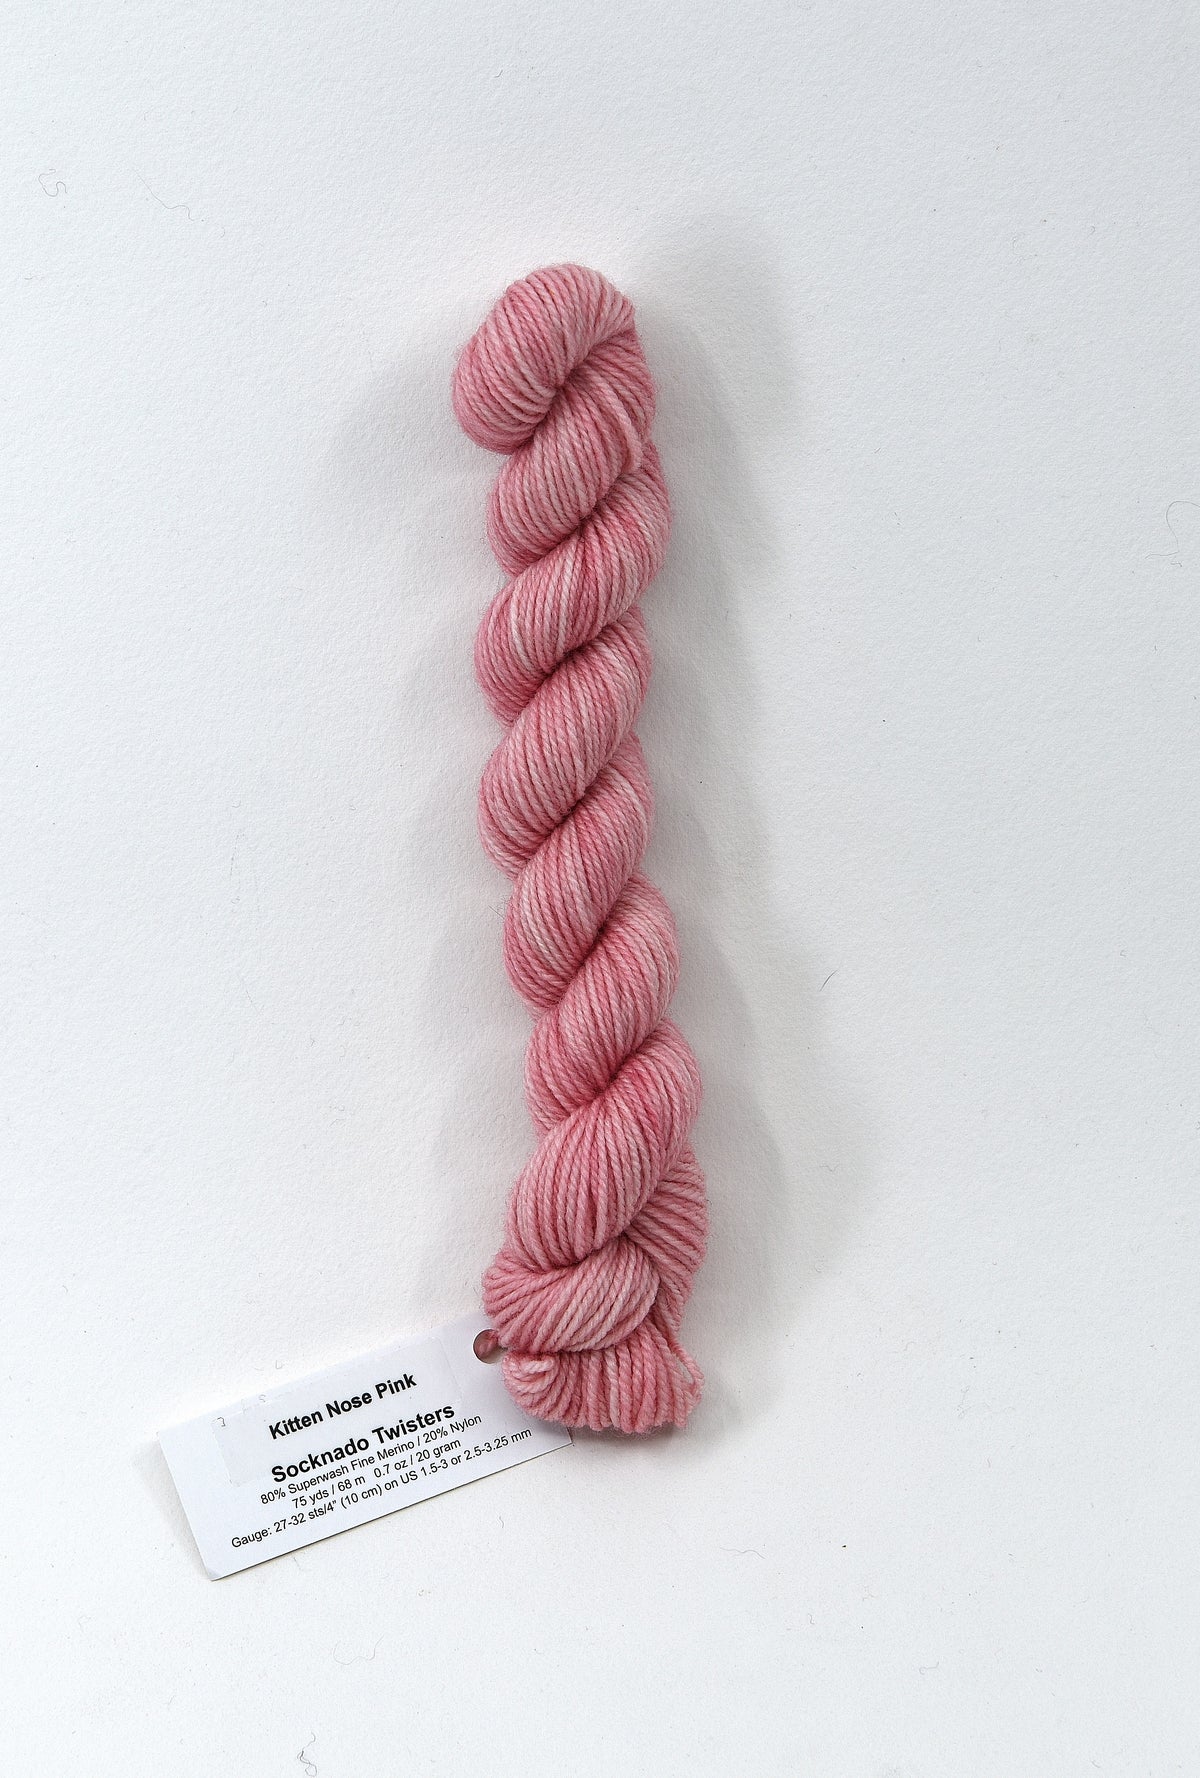 Kitten Nose Pink - Socknado Mini Twister 20 Gram - Dyed Stock